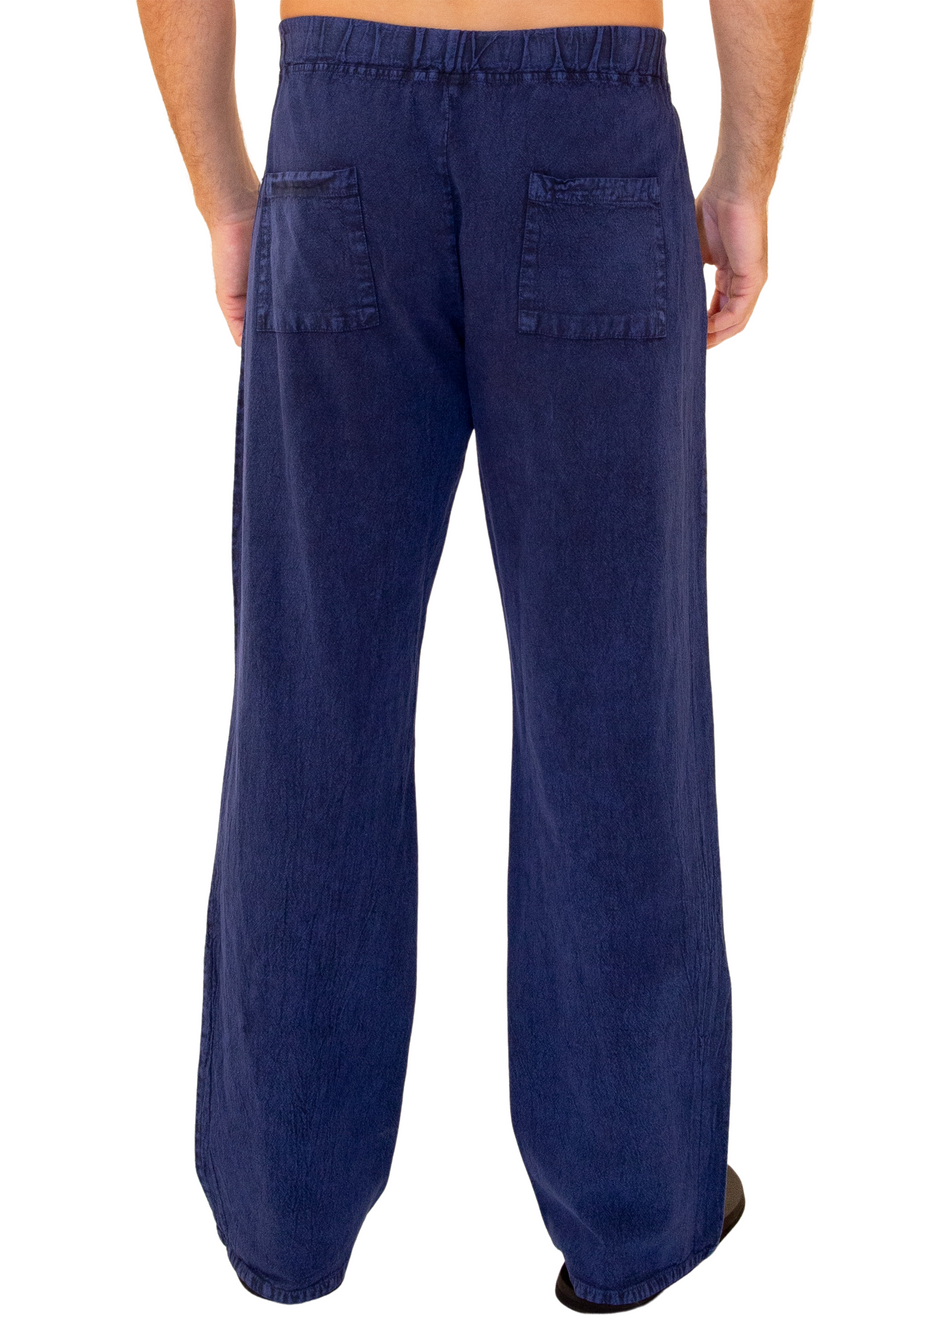 GZ1010 - Navy Cotton Drawstring Waist Pants